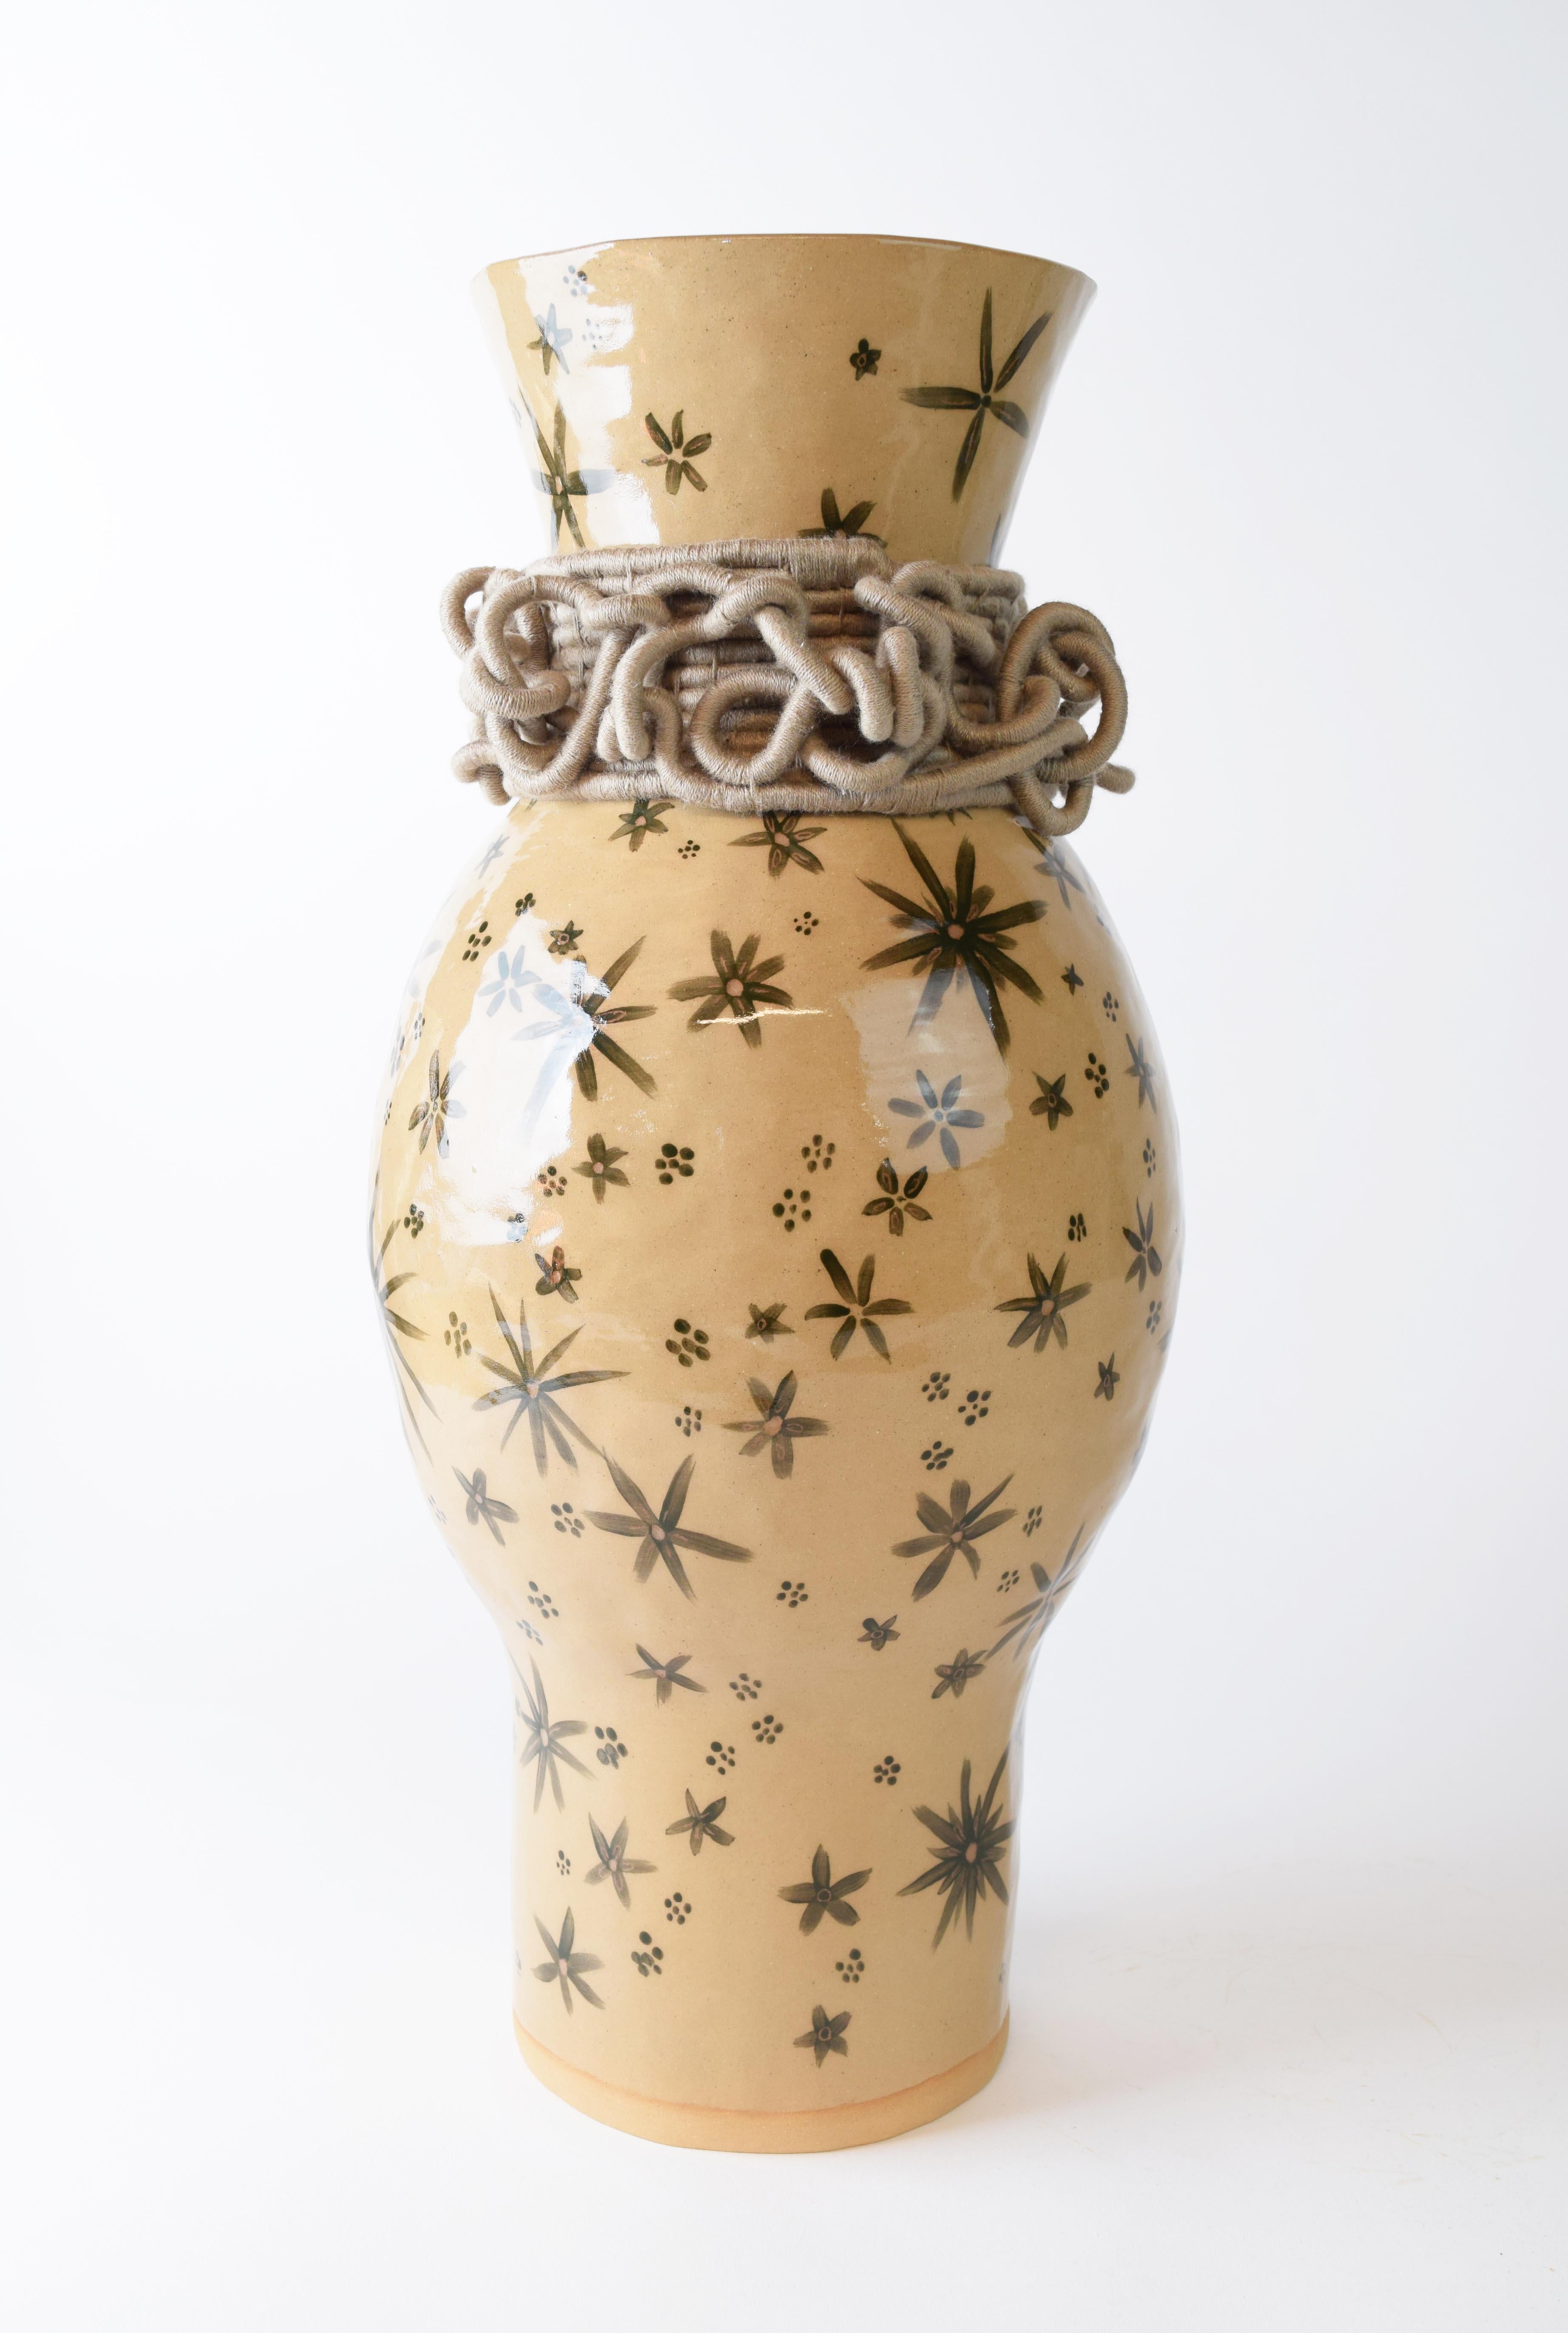 Organic Modern OOAK Handmade Ceramic Vase #790 - Olive Green Glazed Floral, Khaki Cotton Detail For Sale